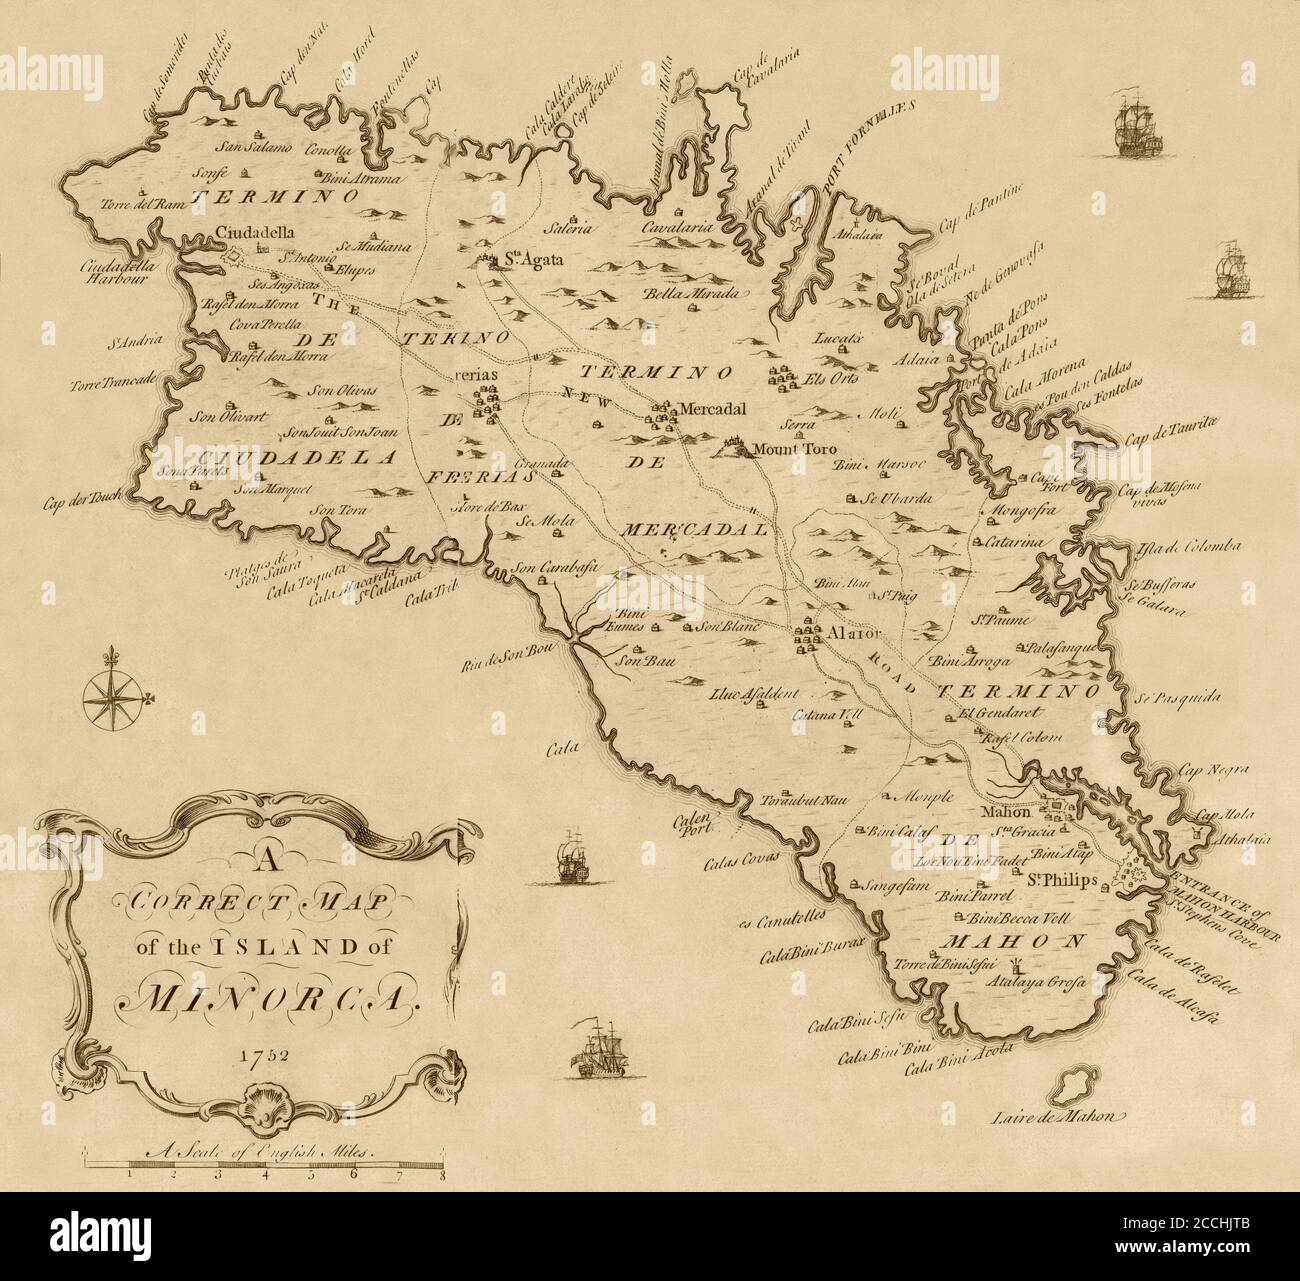 Map Of Minorca 1752 Stock Photo